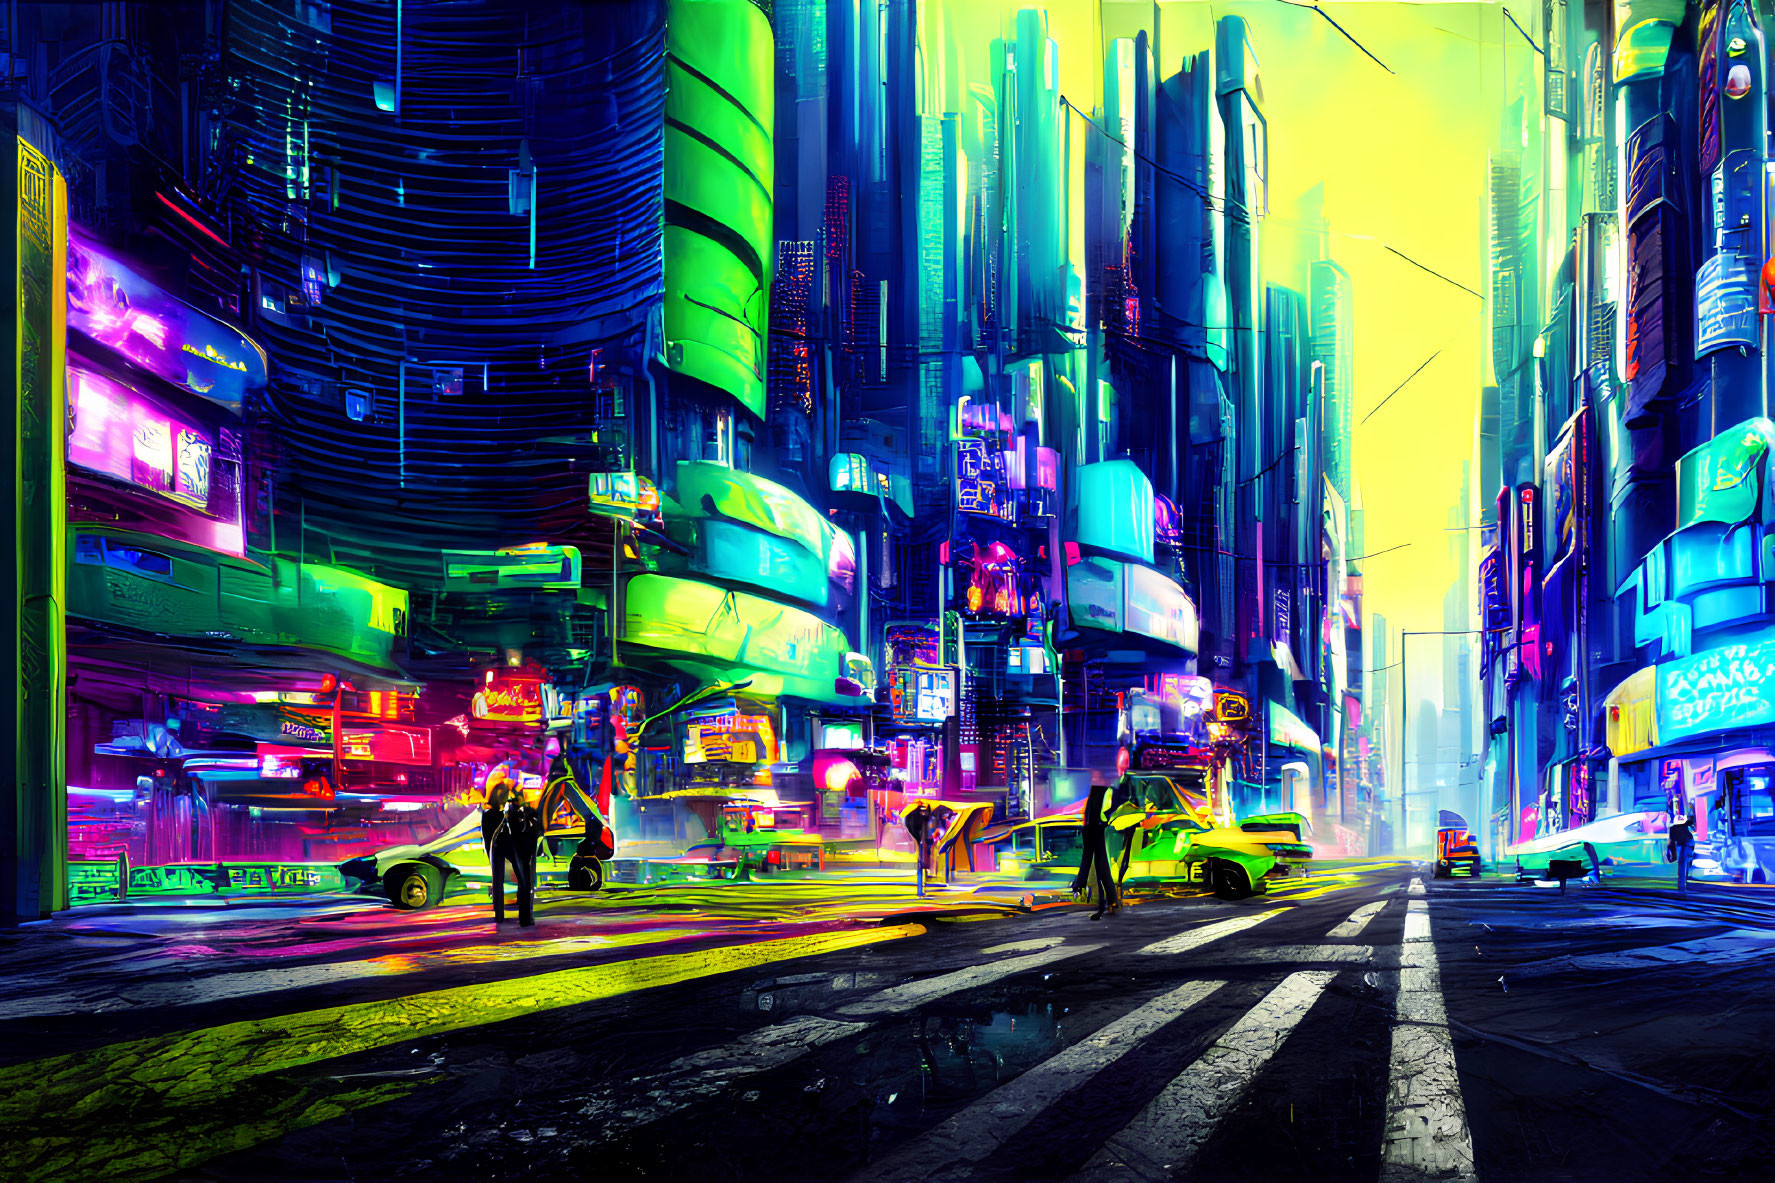 Neon-lit cyberpunk cityscape with futuristic elements